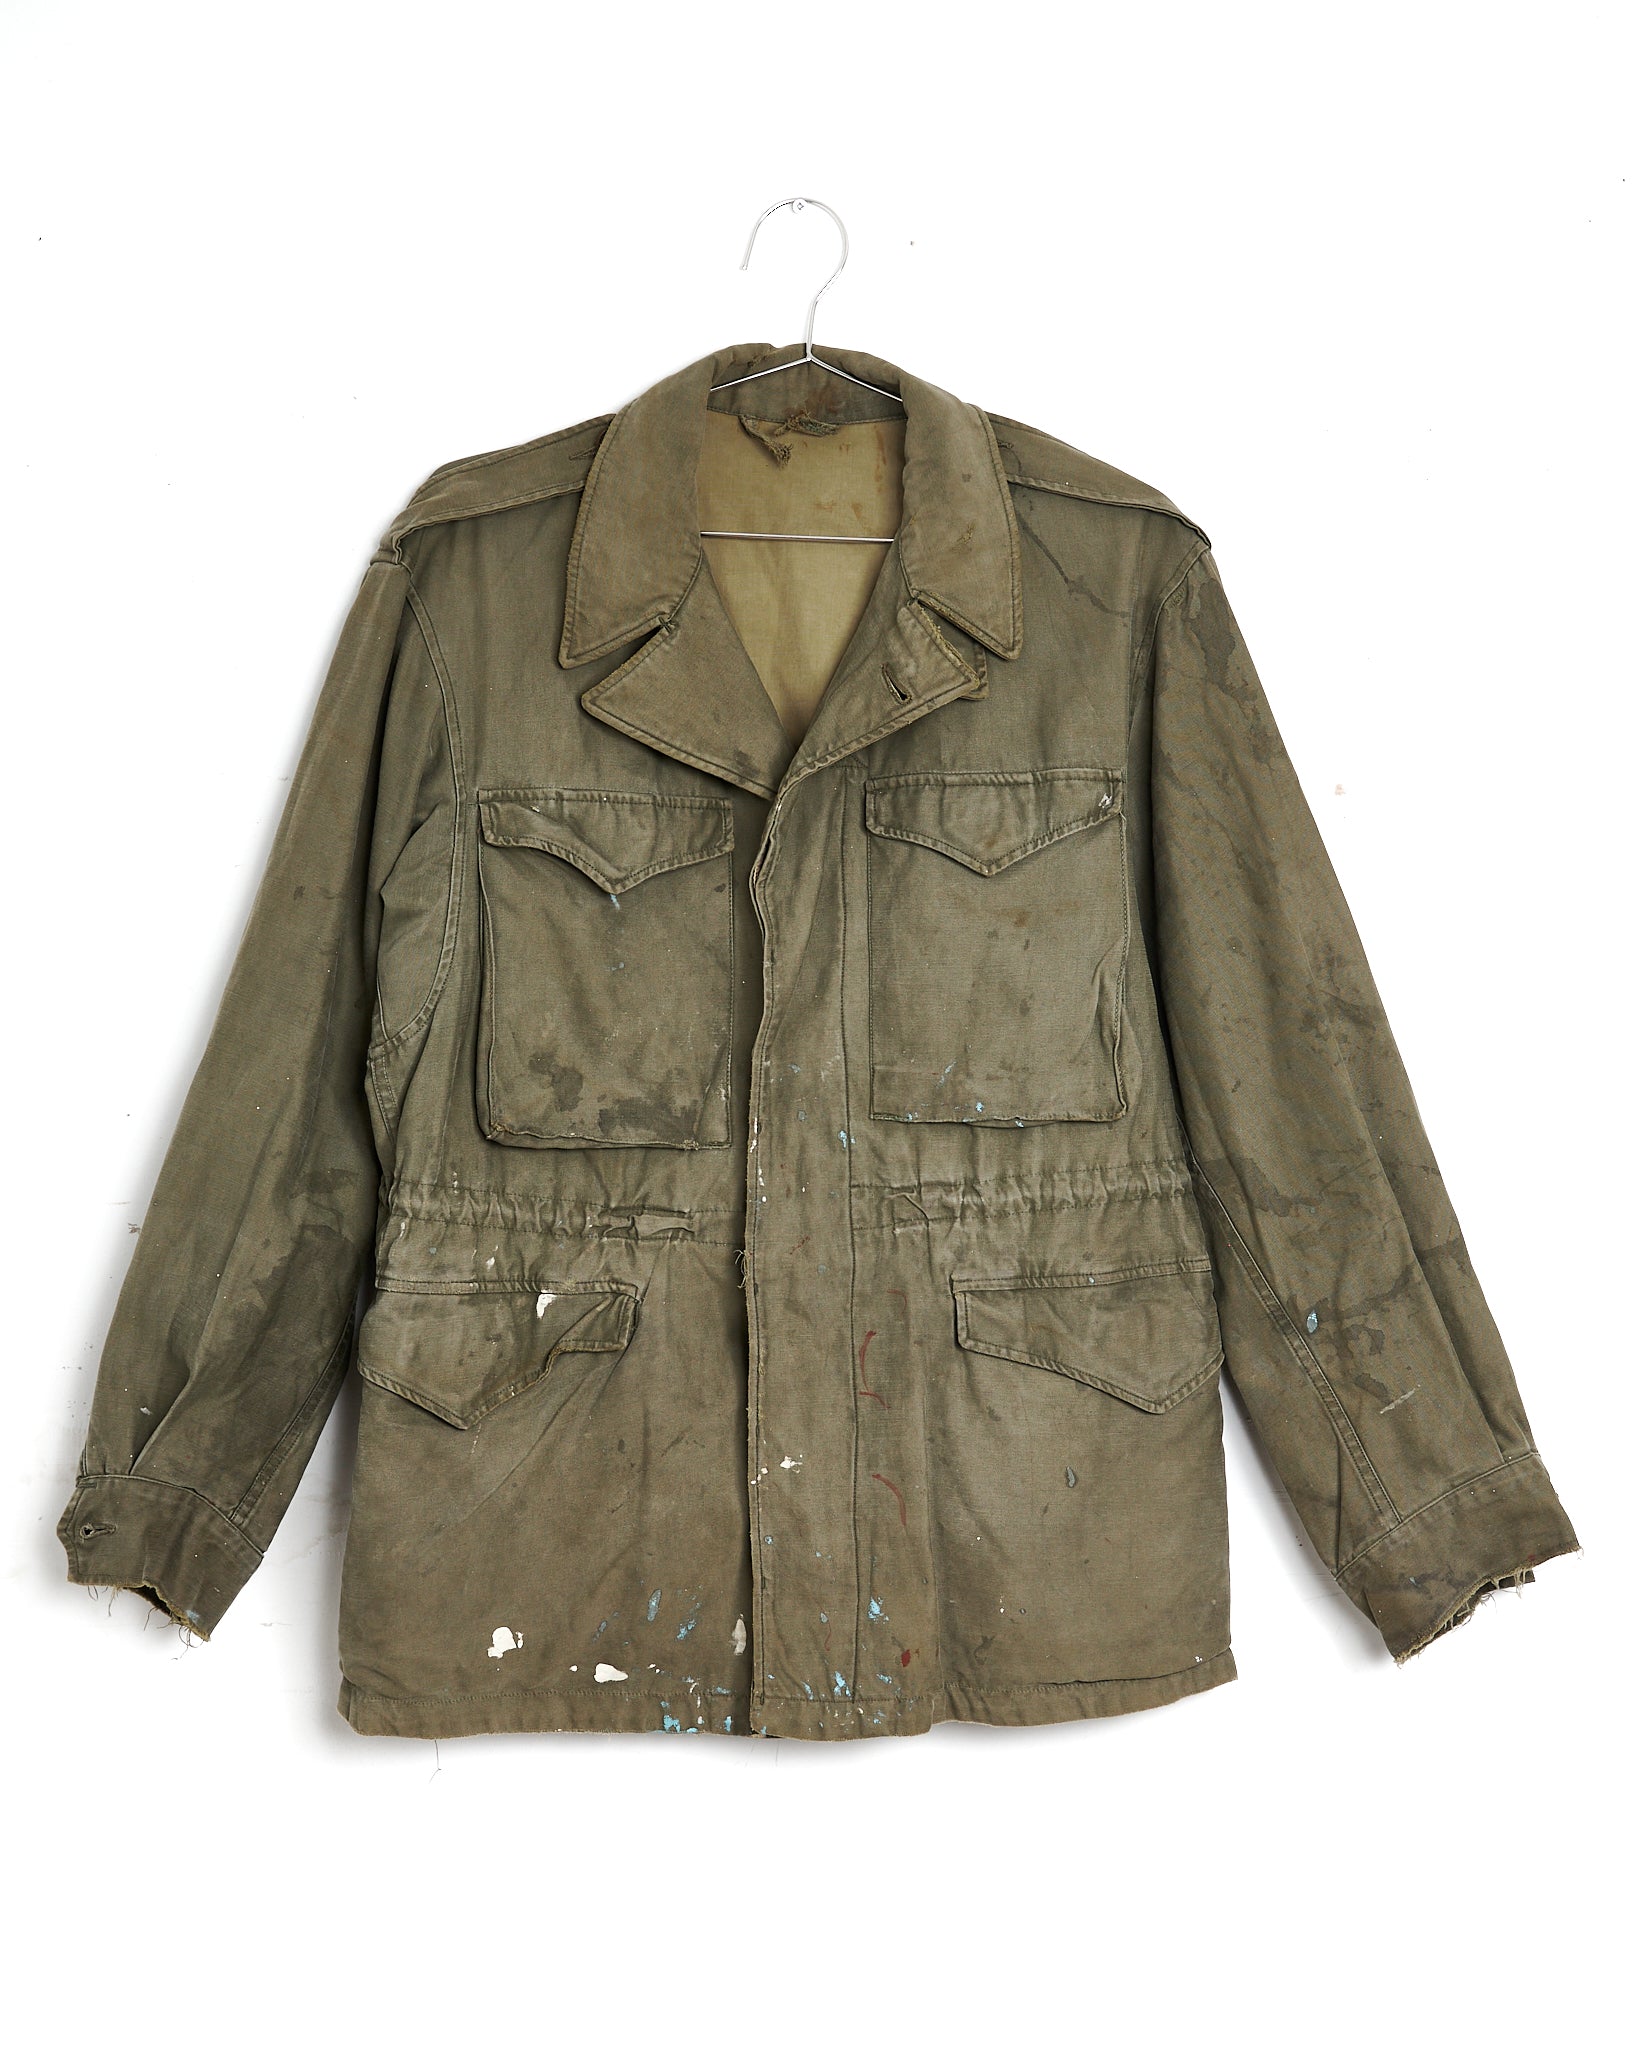 Vintage Us Army M 1943 M43 Field Jacket 1945 Ww2 Size 36r Ph